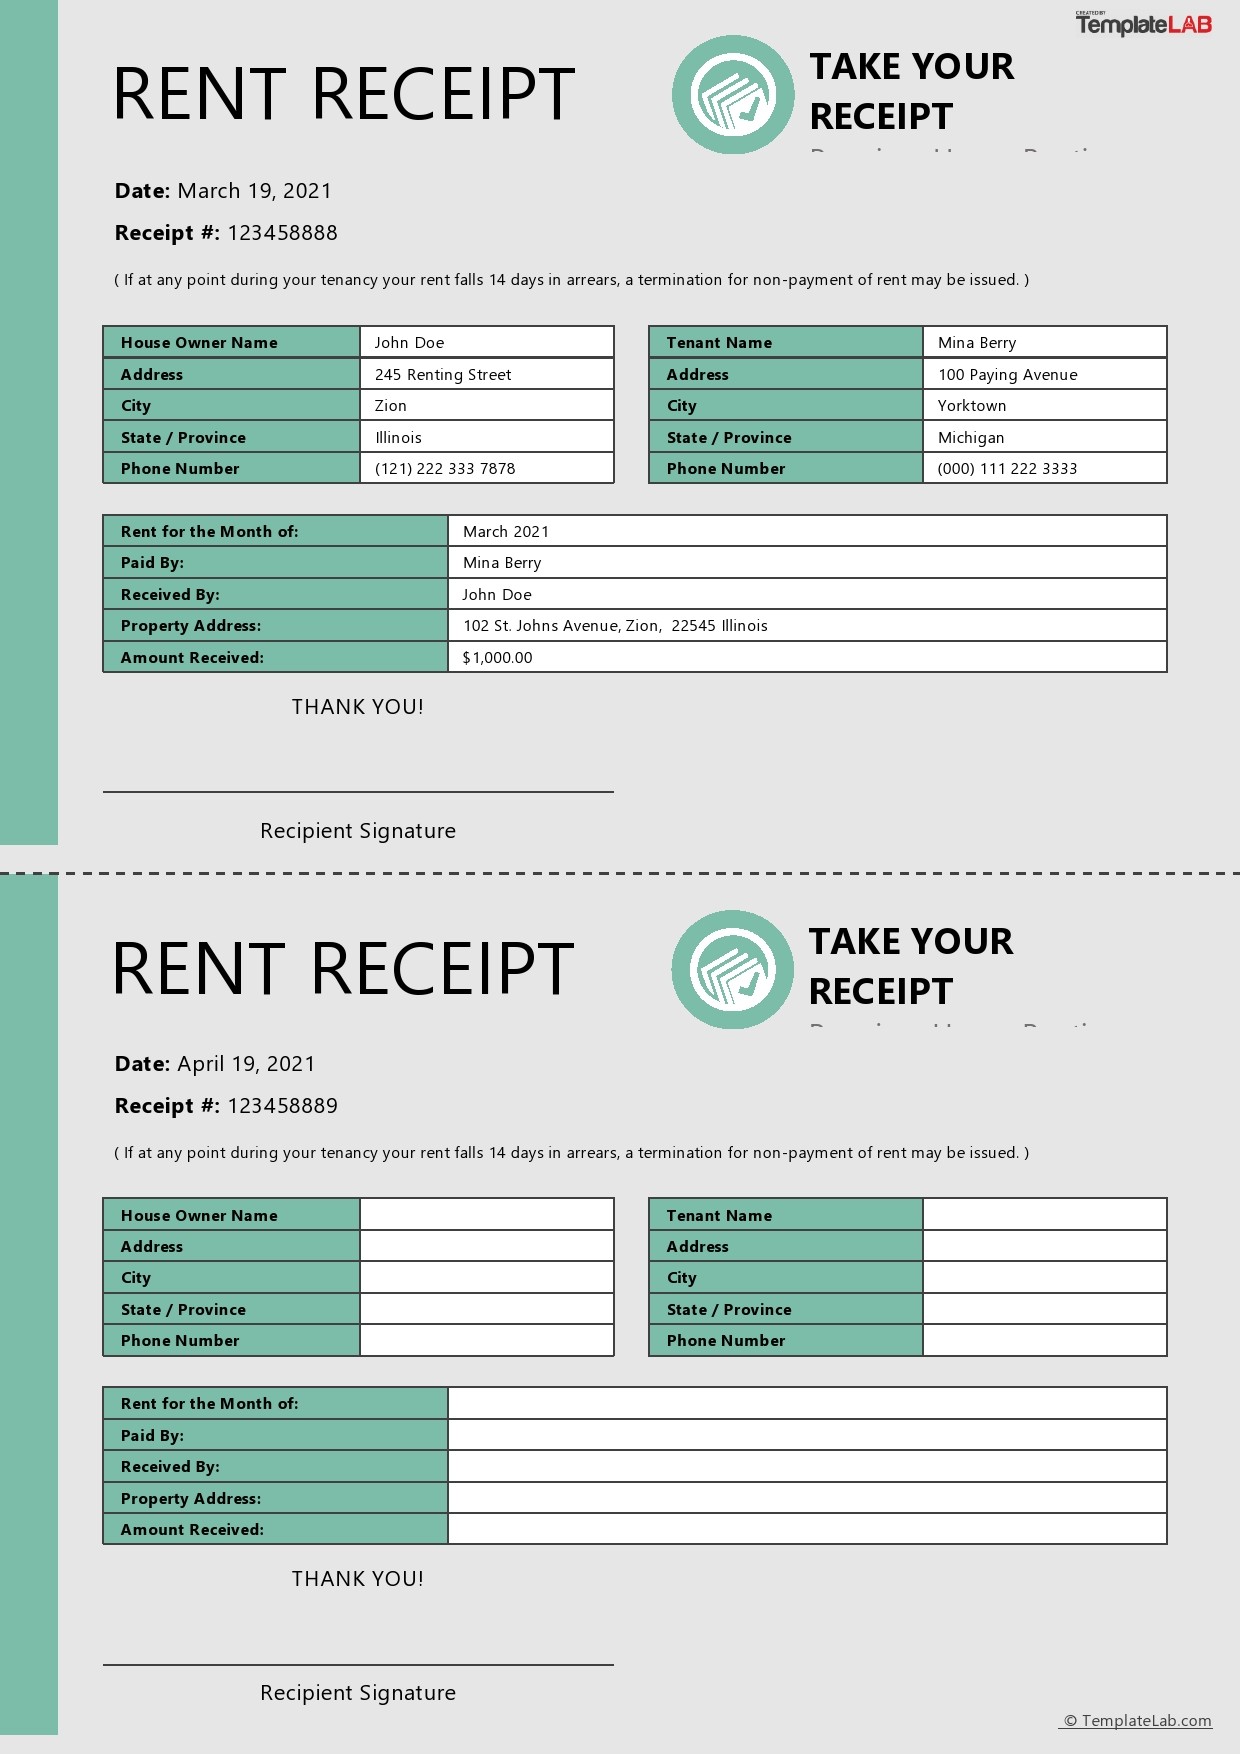 Free Rent Receipt Template 03 - TemplateLab.com